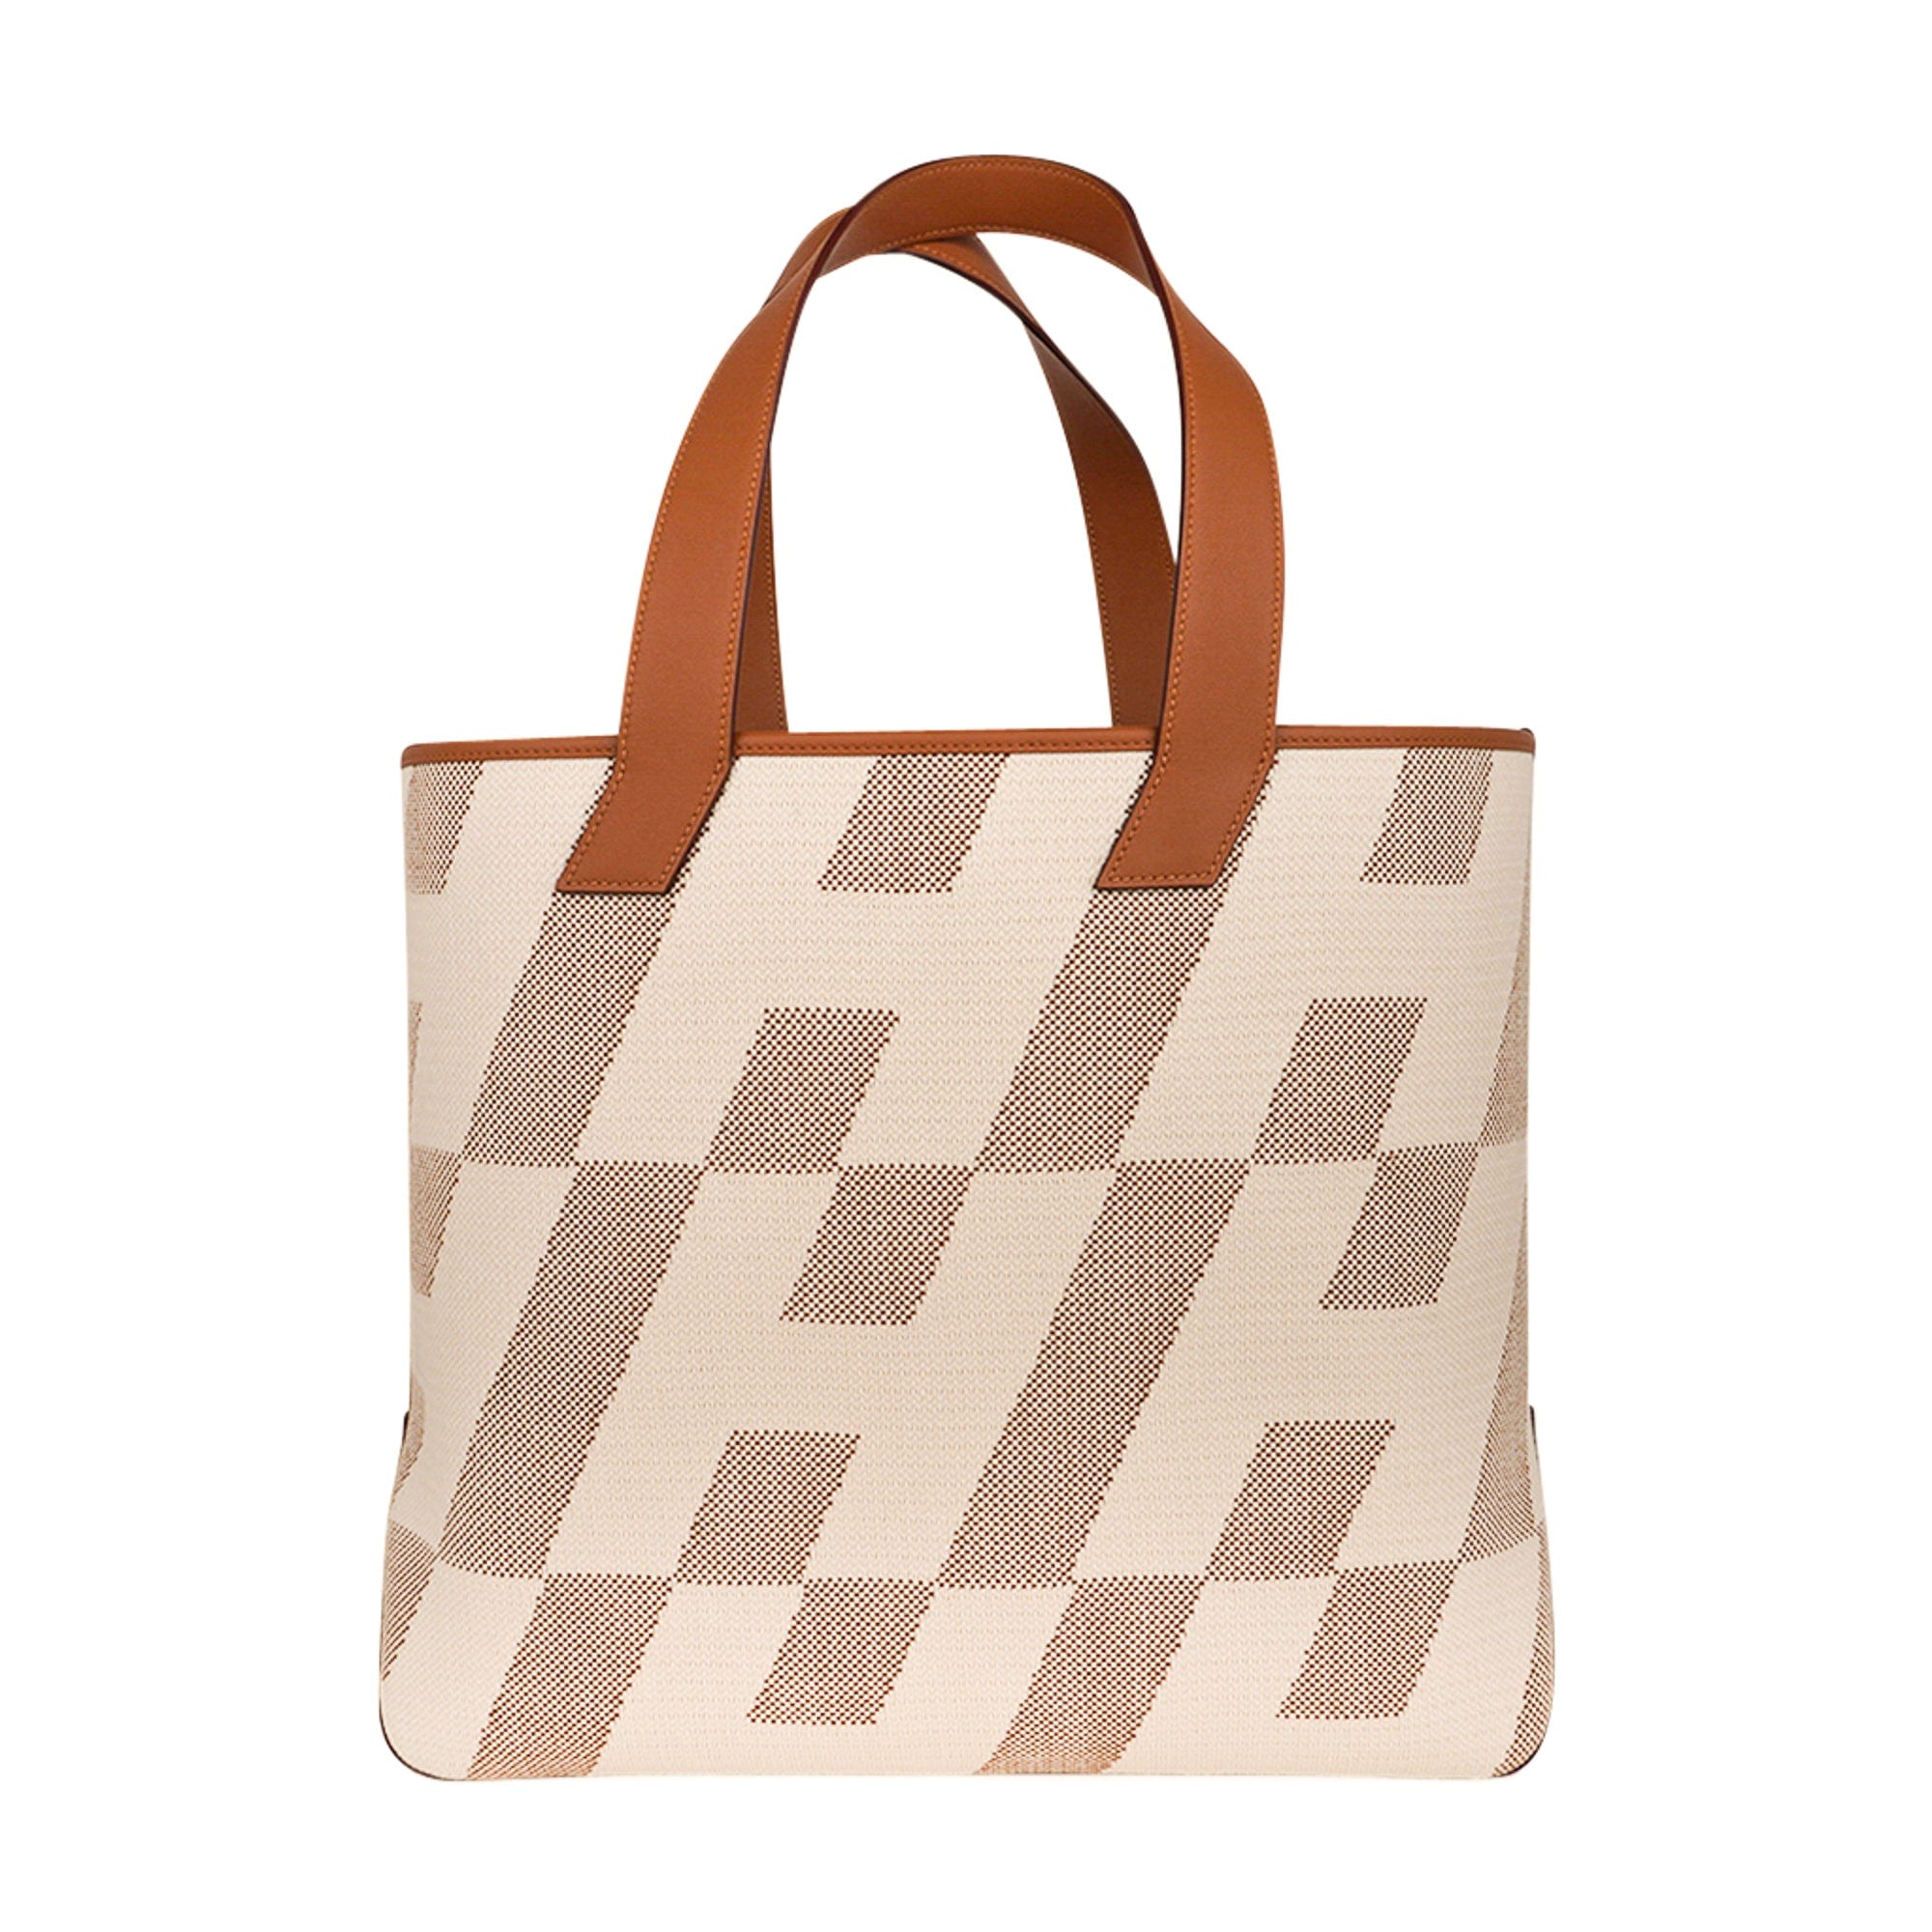 Louis Vuitton -Speedy 40 Monogram Canvas Satchel / Top Handle Bag